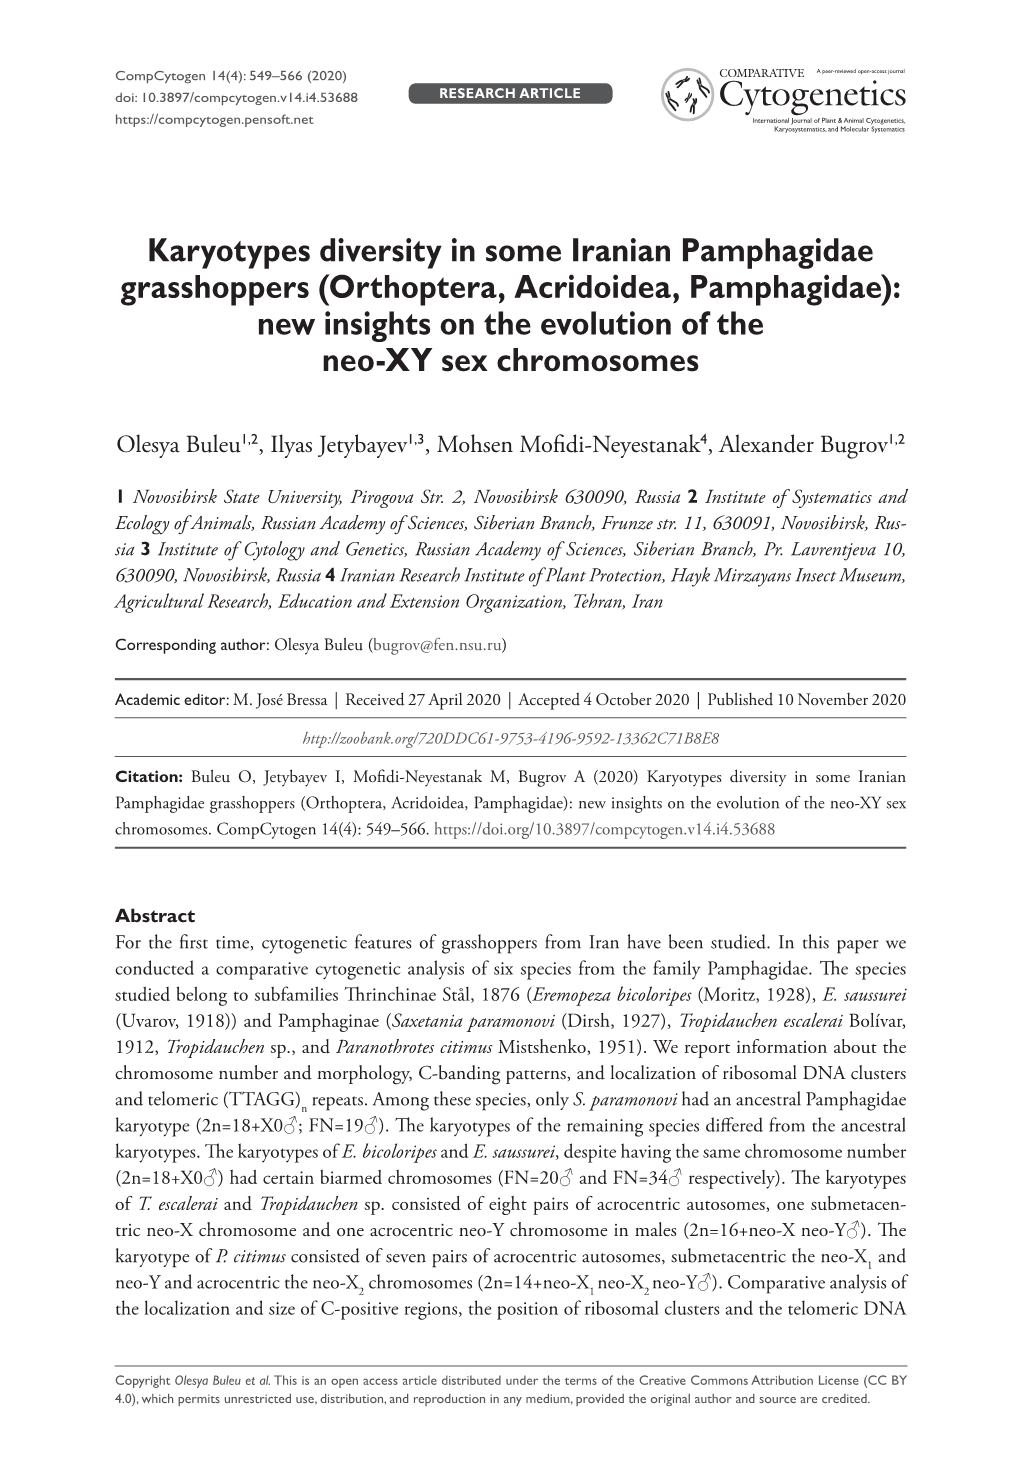 Orthoptera, Acridoidea, Pamphagidae): New Insights on the Evolution of the Neo-XY Sex Chromosomes